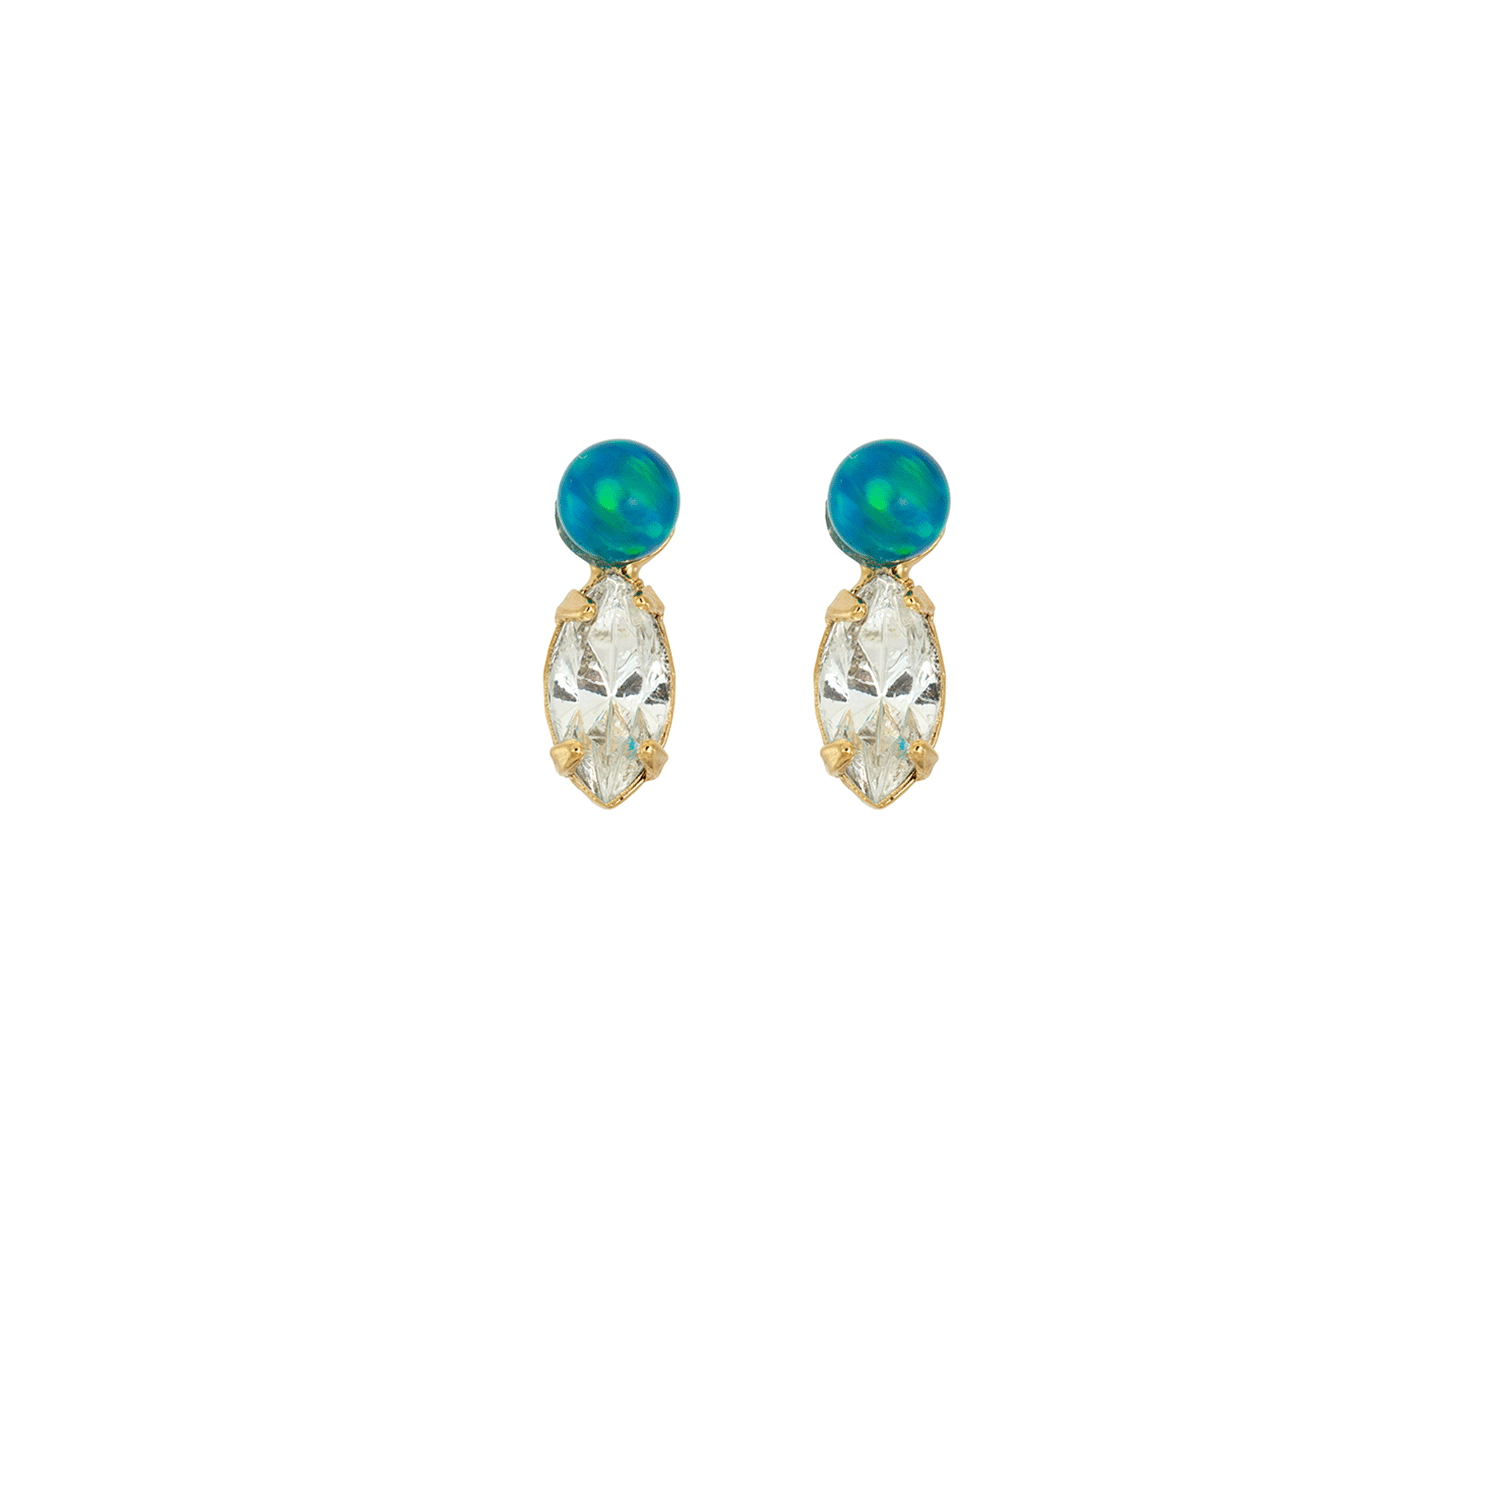 Buy Day Earrings - Swarovski Crystal – Lionette NY